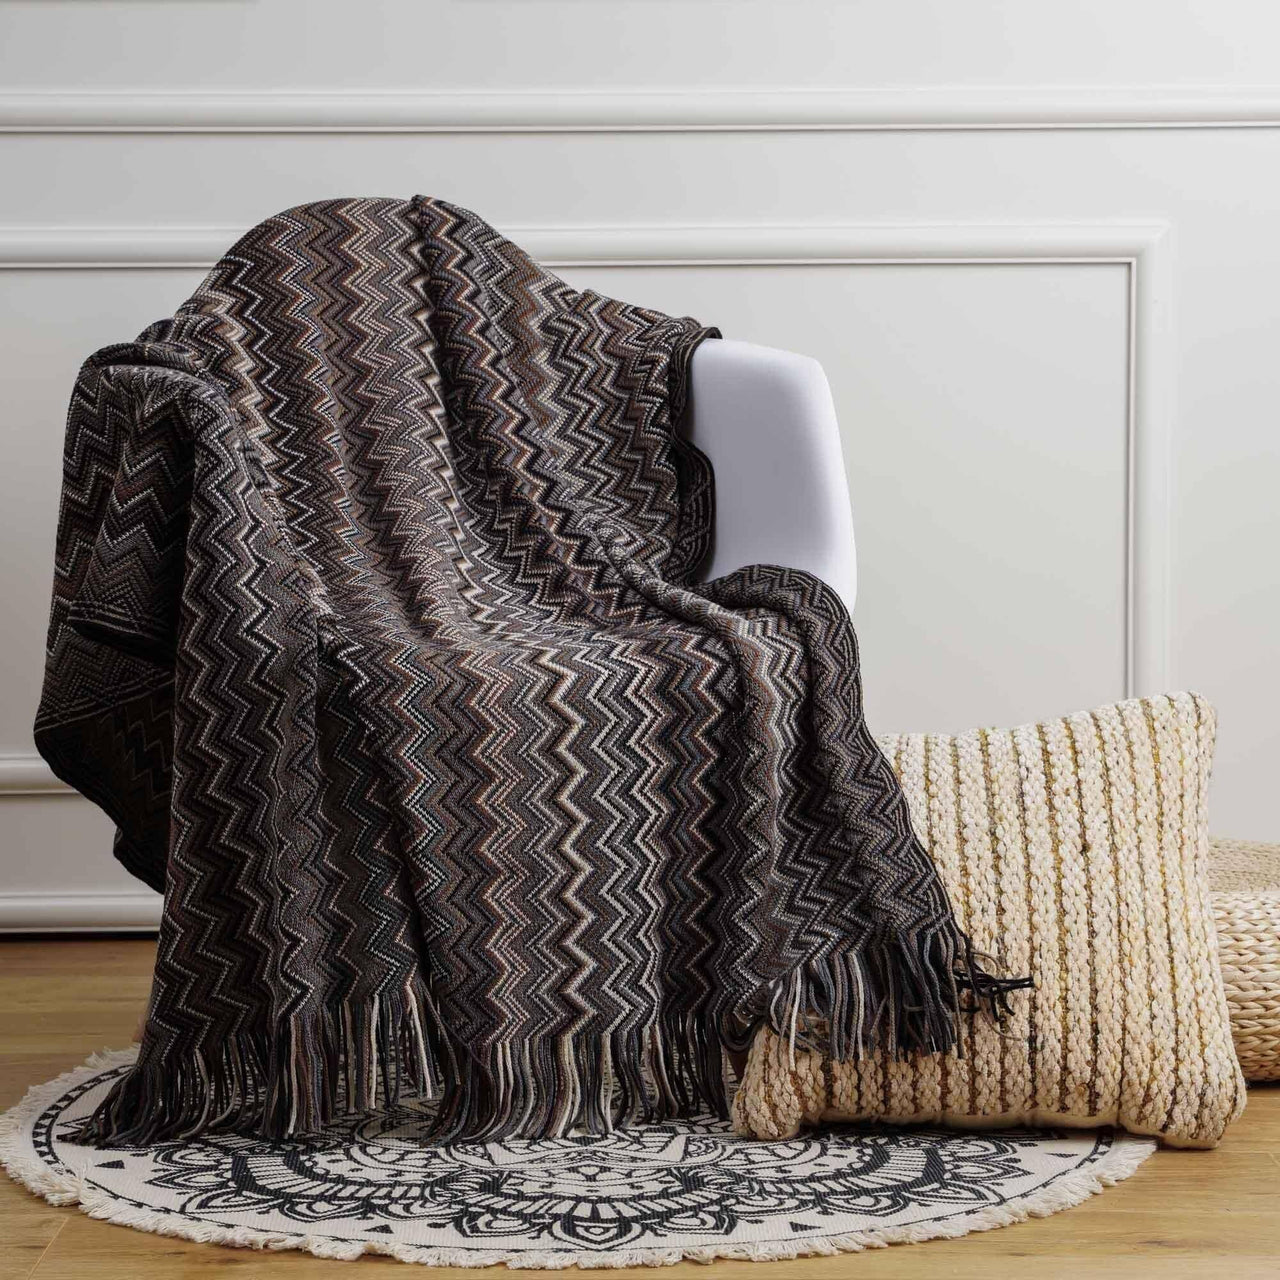 "Bohemian Symphony" Throw Blanket Acrylic Knitted With Tassel Blanket Artedimo 